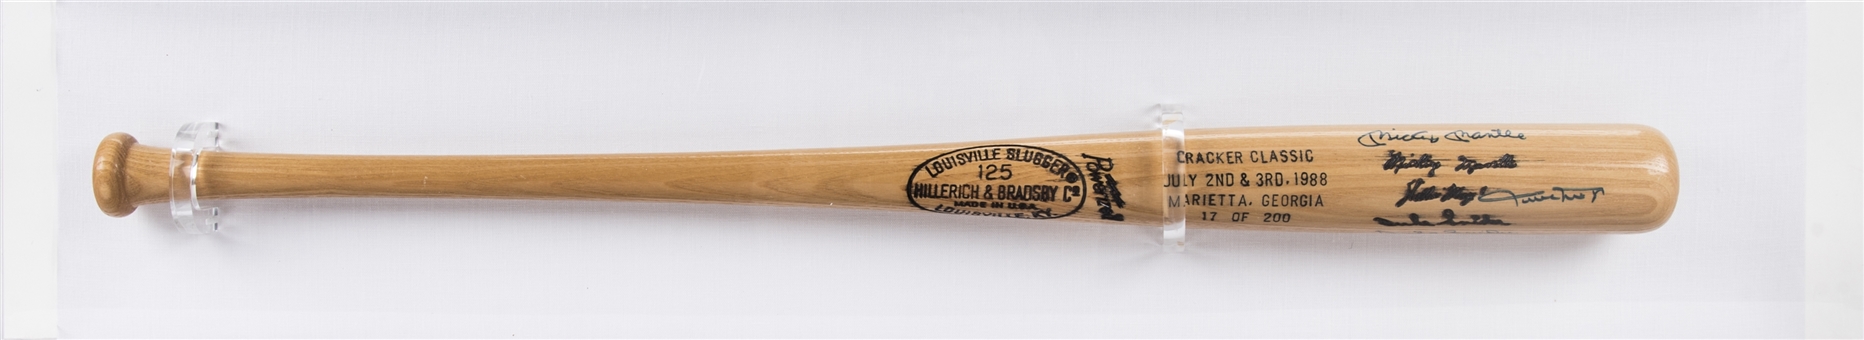 1988 Mickey Mantle, Duke Snider, & Willie Mays Multi Signed Louisville Slugger Cracker Classic Commemorative Bat in Display Case (17/200) (SGC)